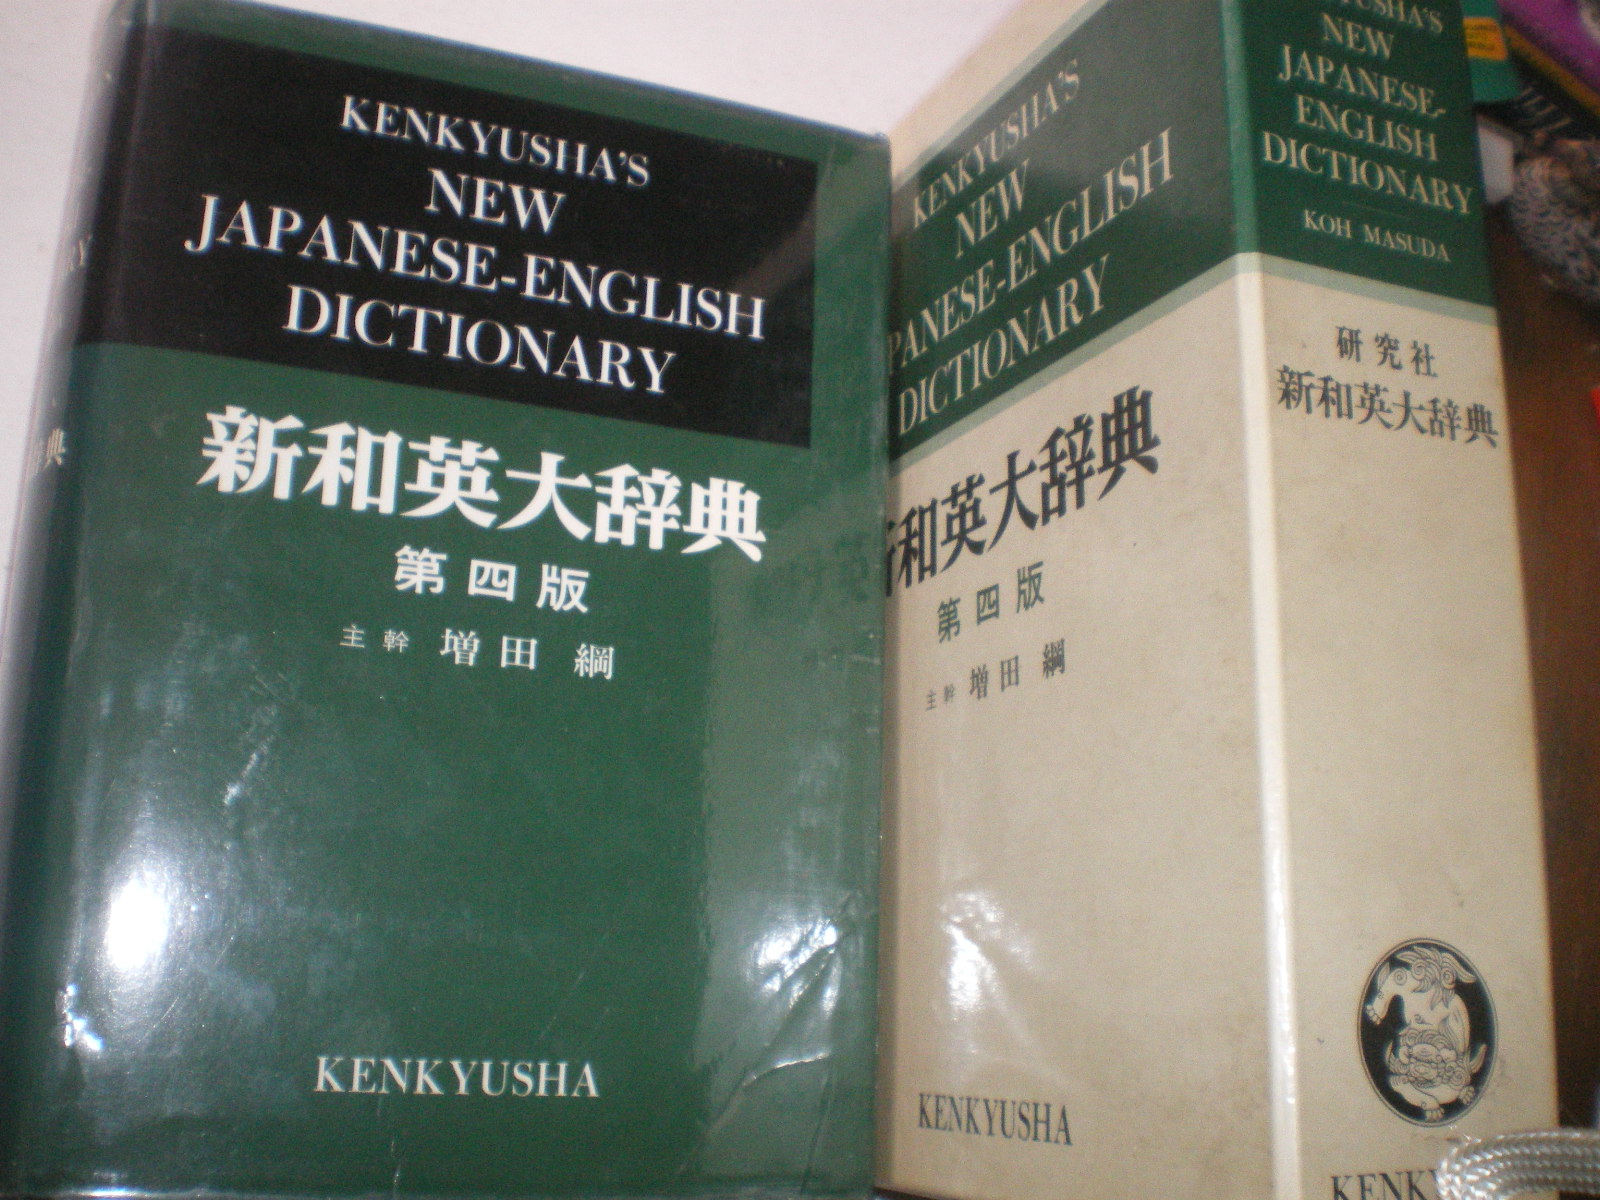 KENKYUSHA'S New Japanese English Dictionary